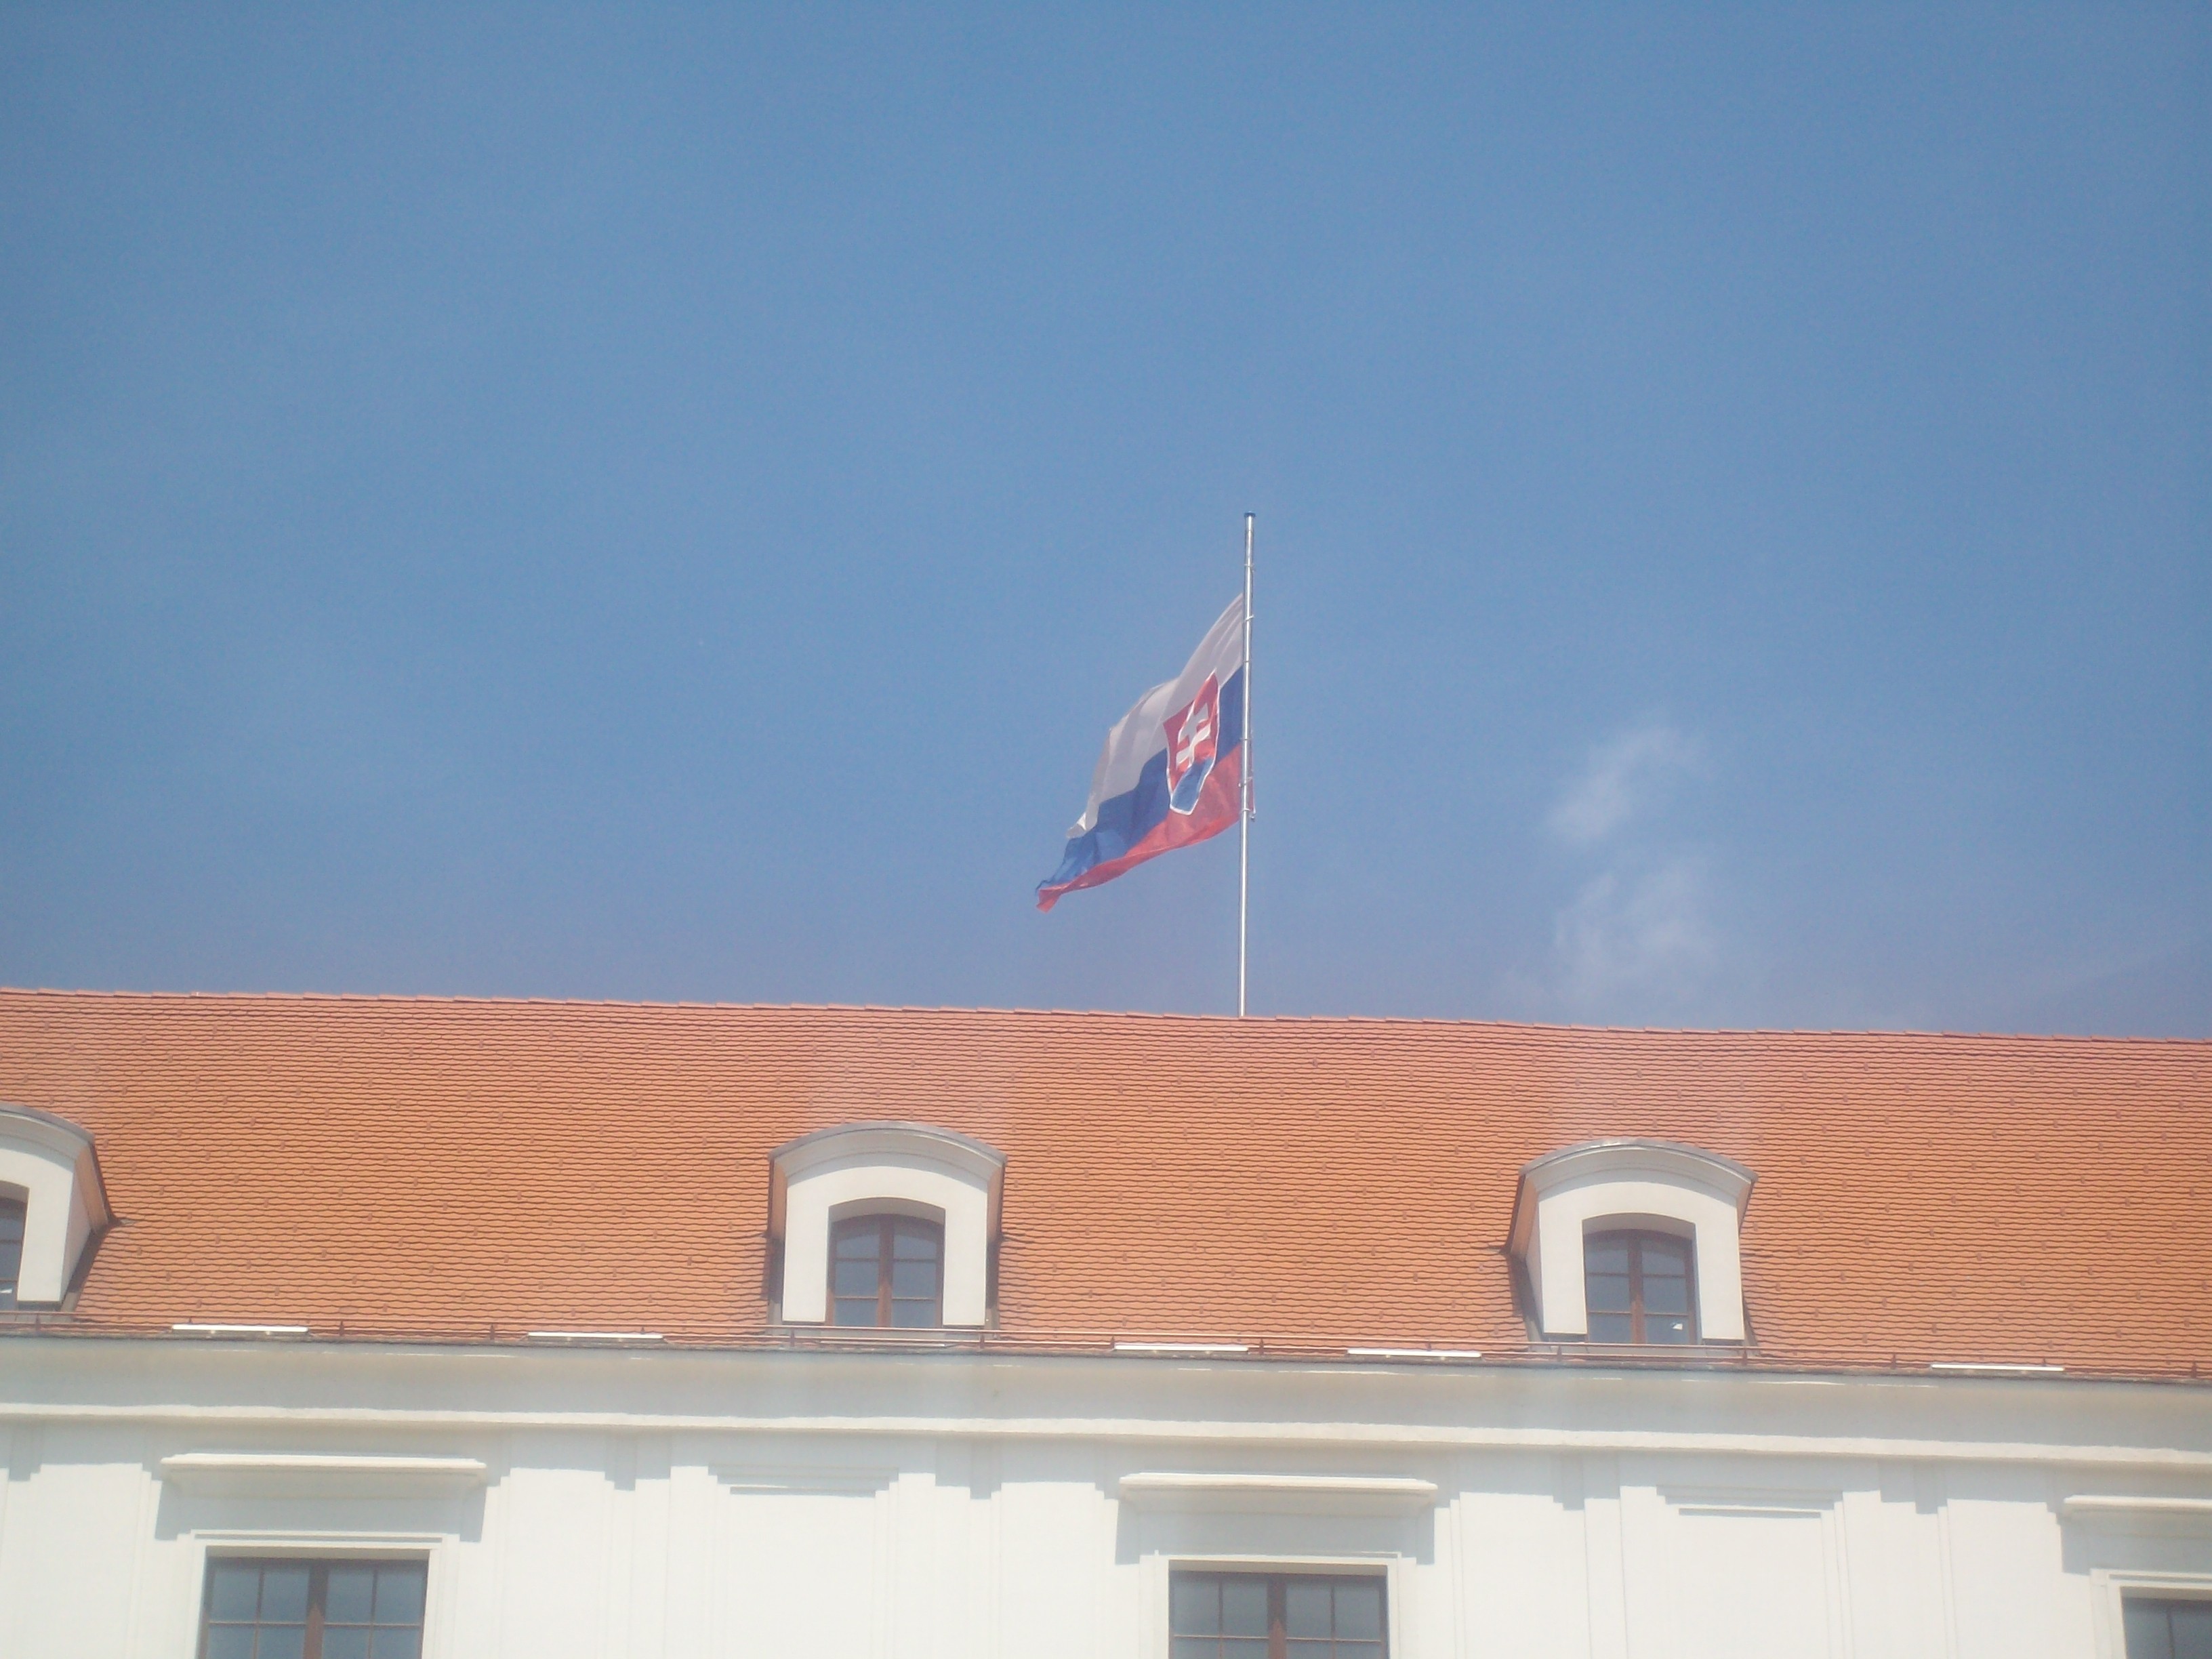 флаги, Словакия, Братислава - обои на рабочий стол